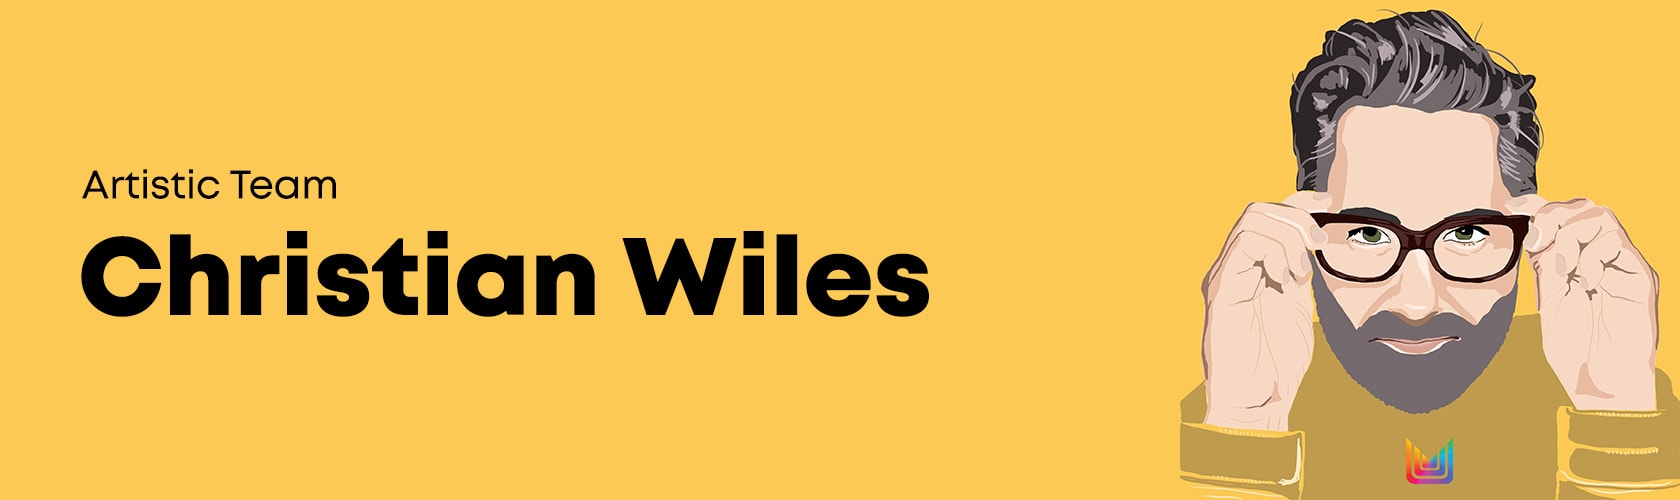 Christian Wiles Banner